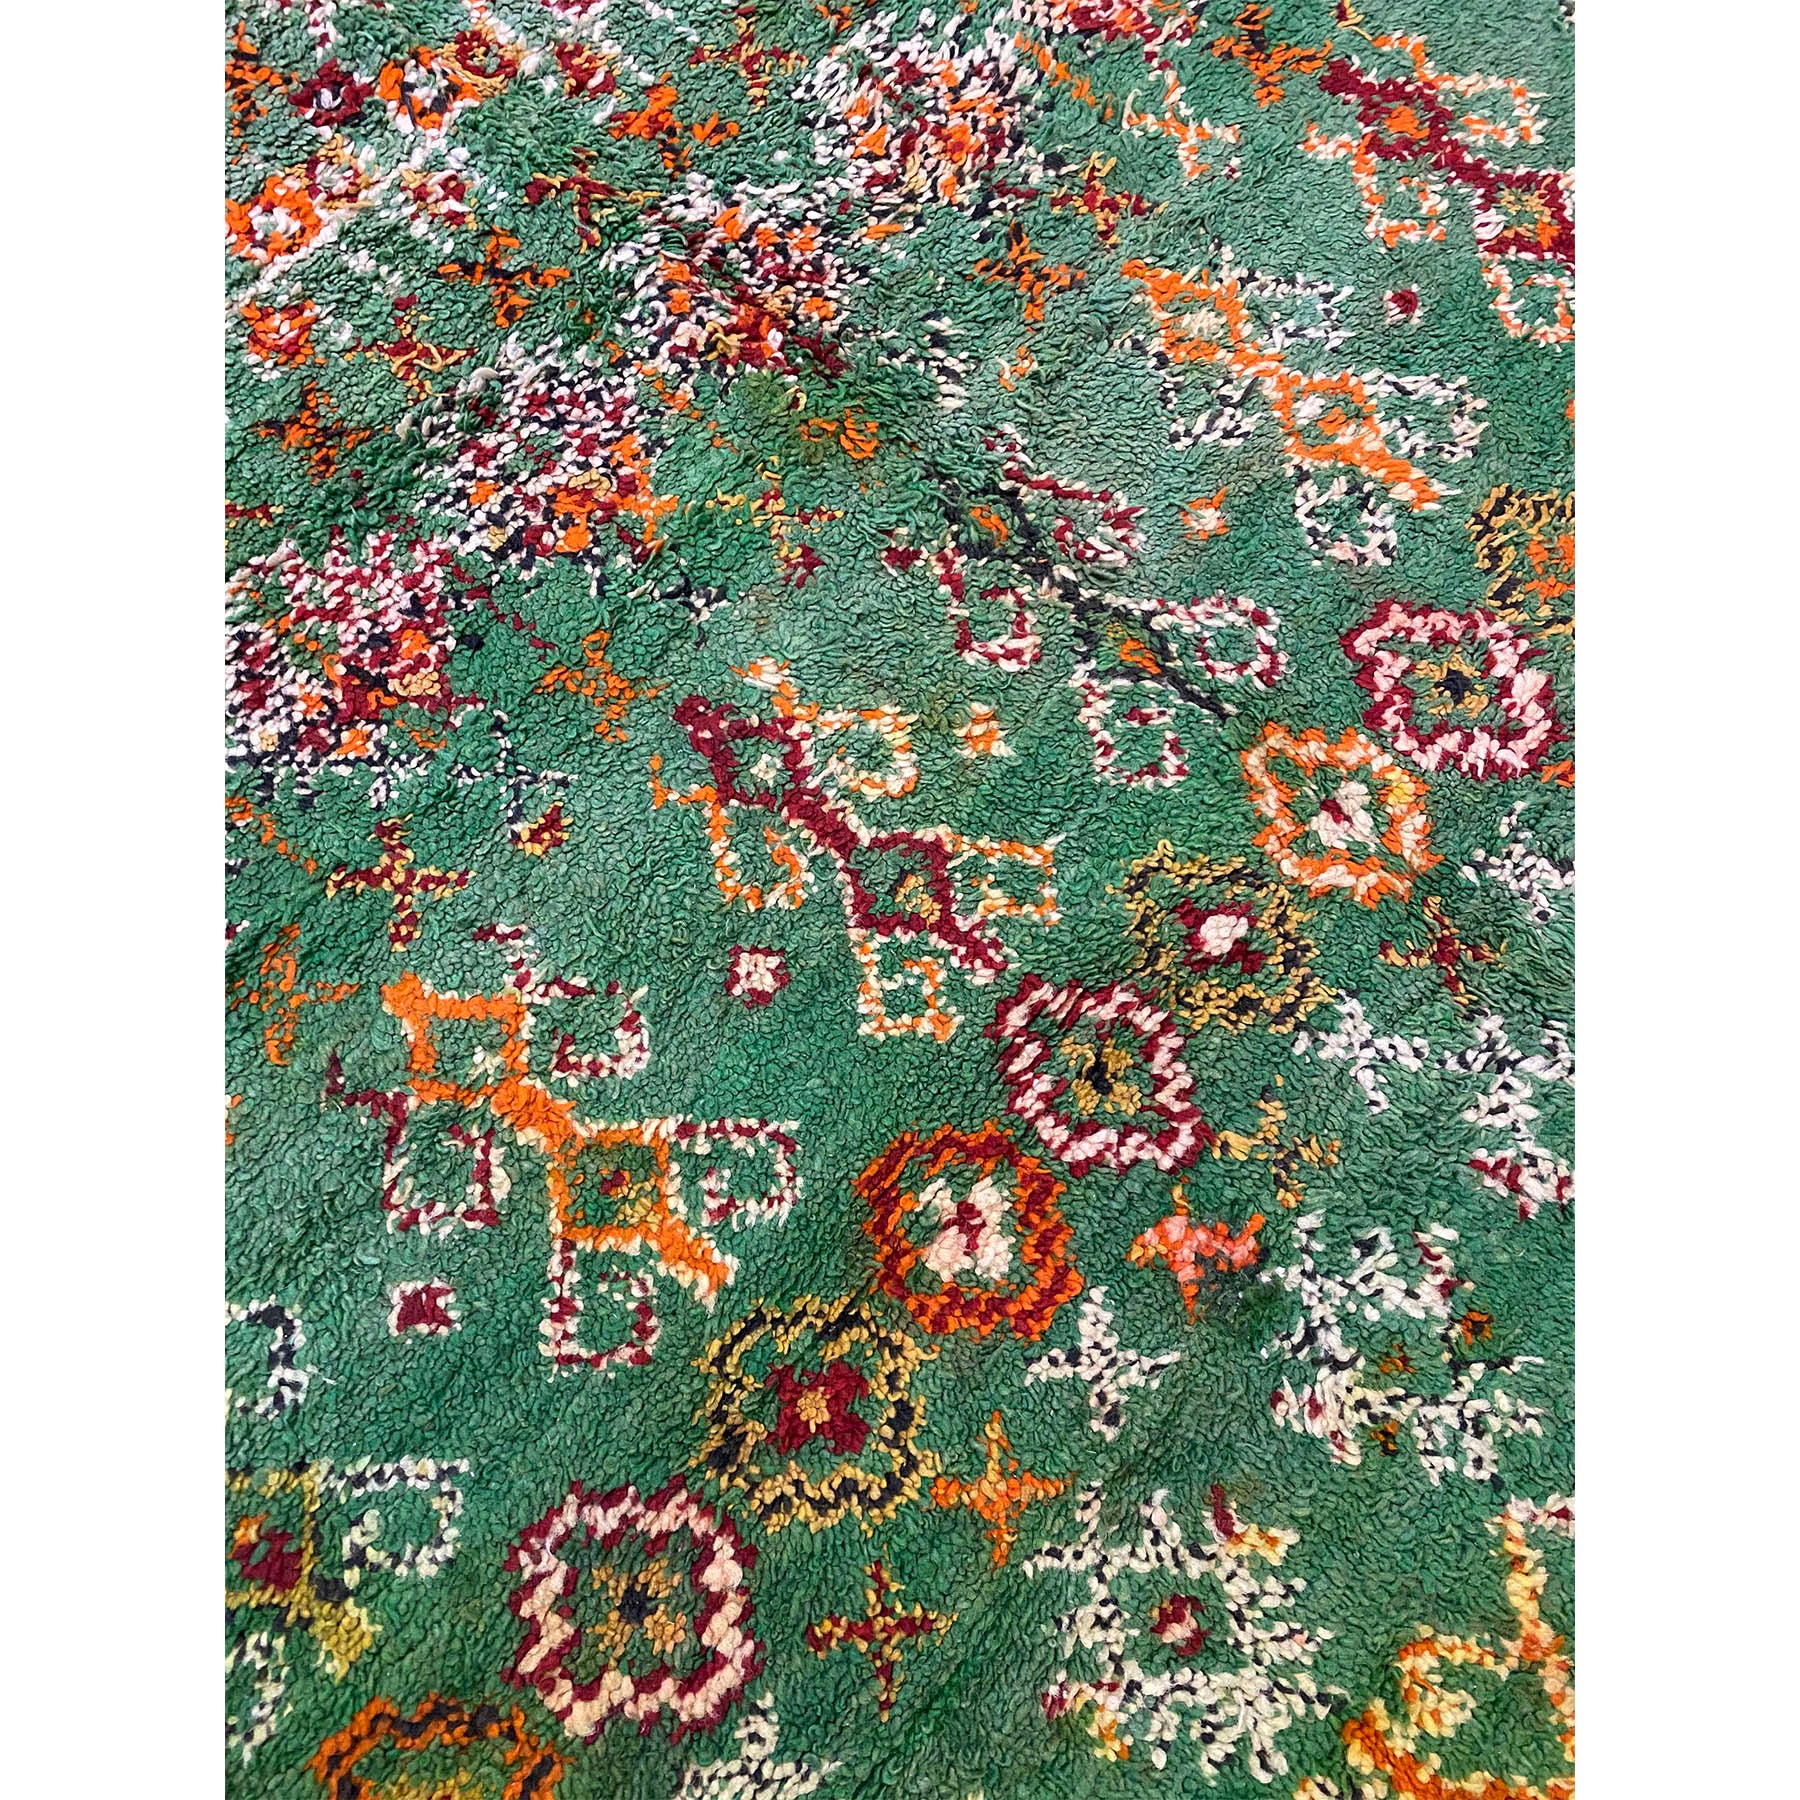 Green Beni Mguild medium sized Moroccan rug with red and orange details - Kantara | Moroccan Rugs